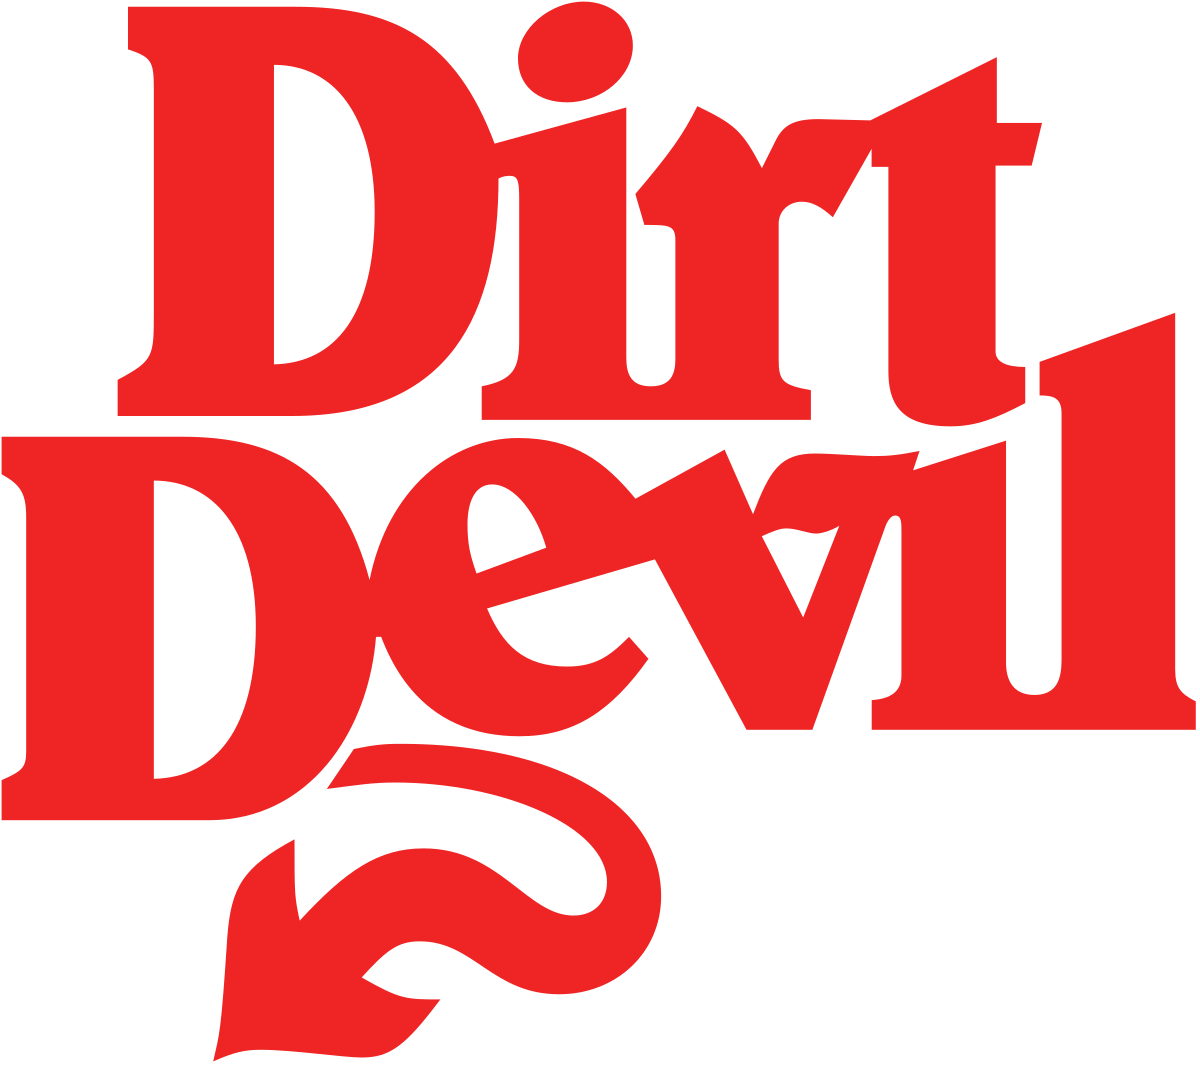 Dirt_Devil_logo.svg